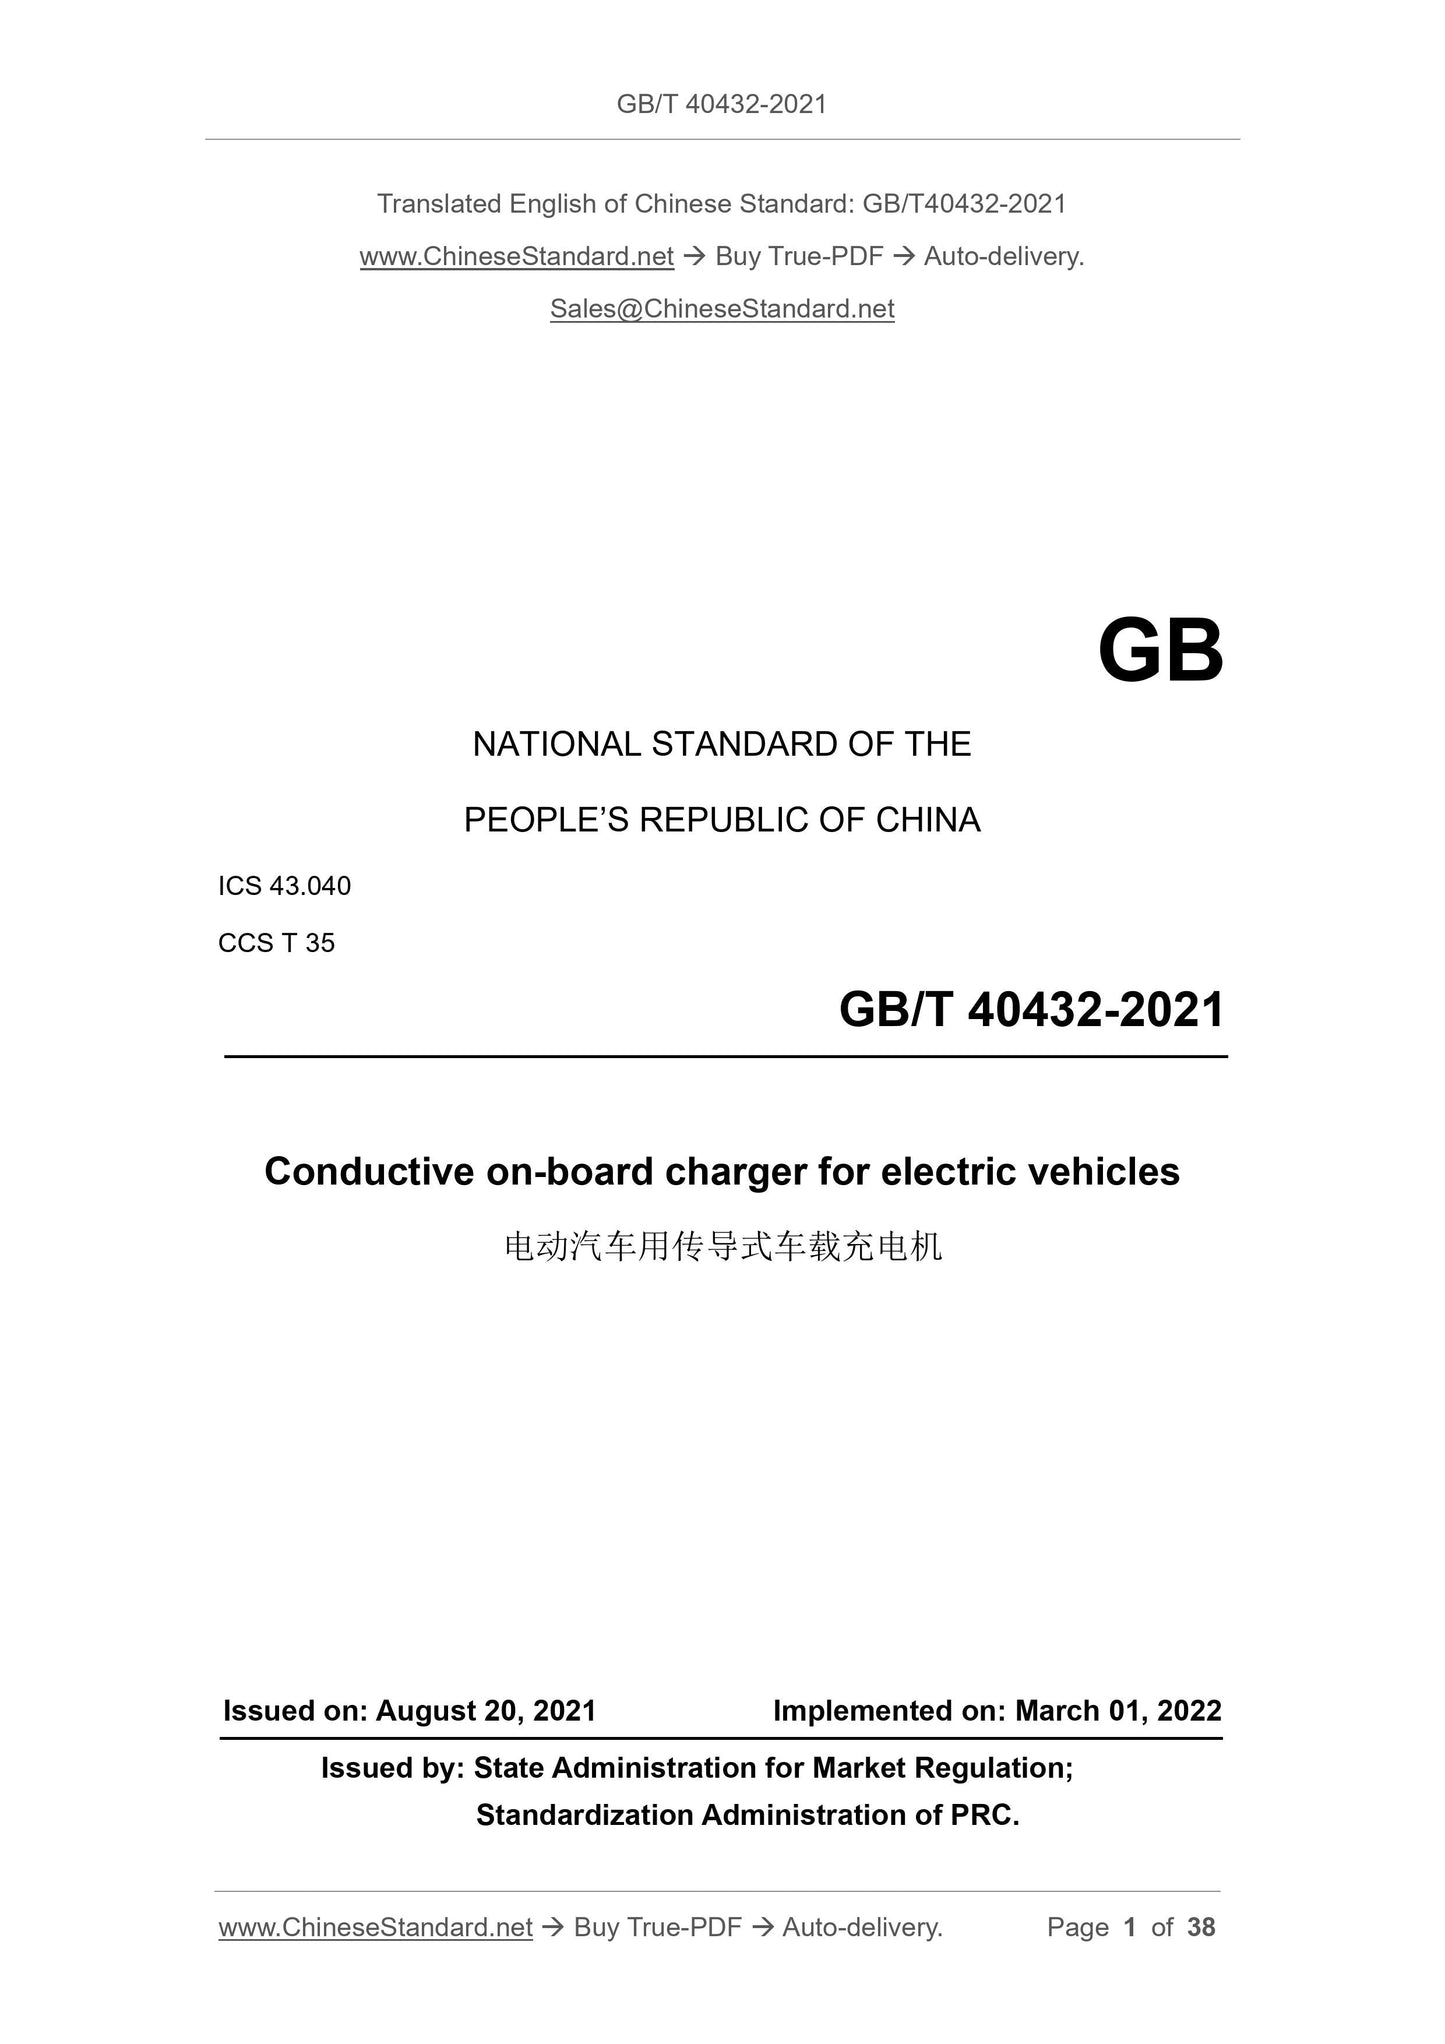 GBT40432-2021 Page 1